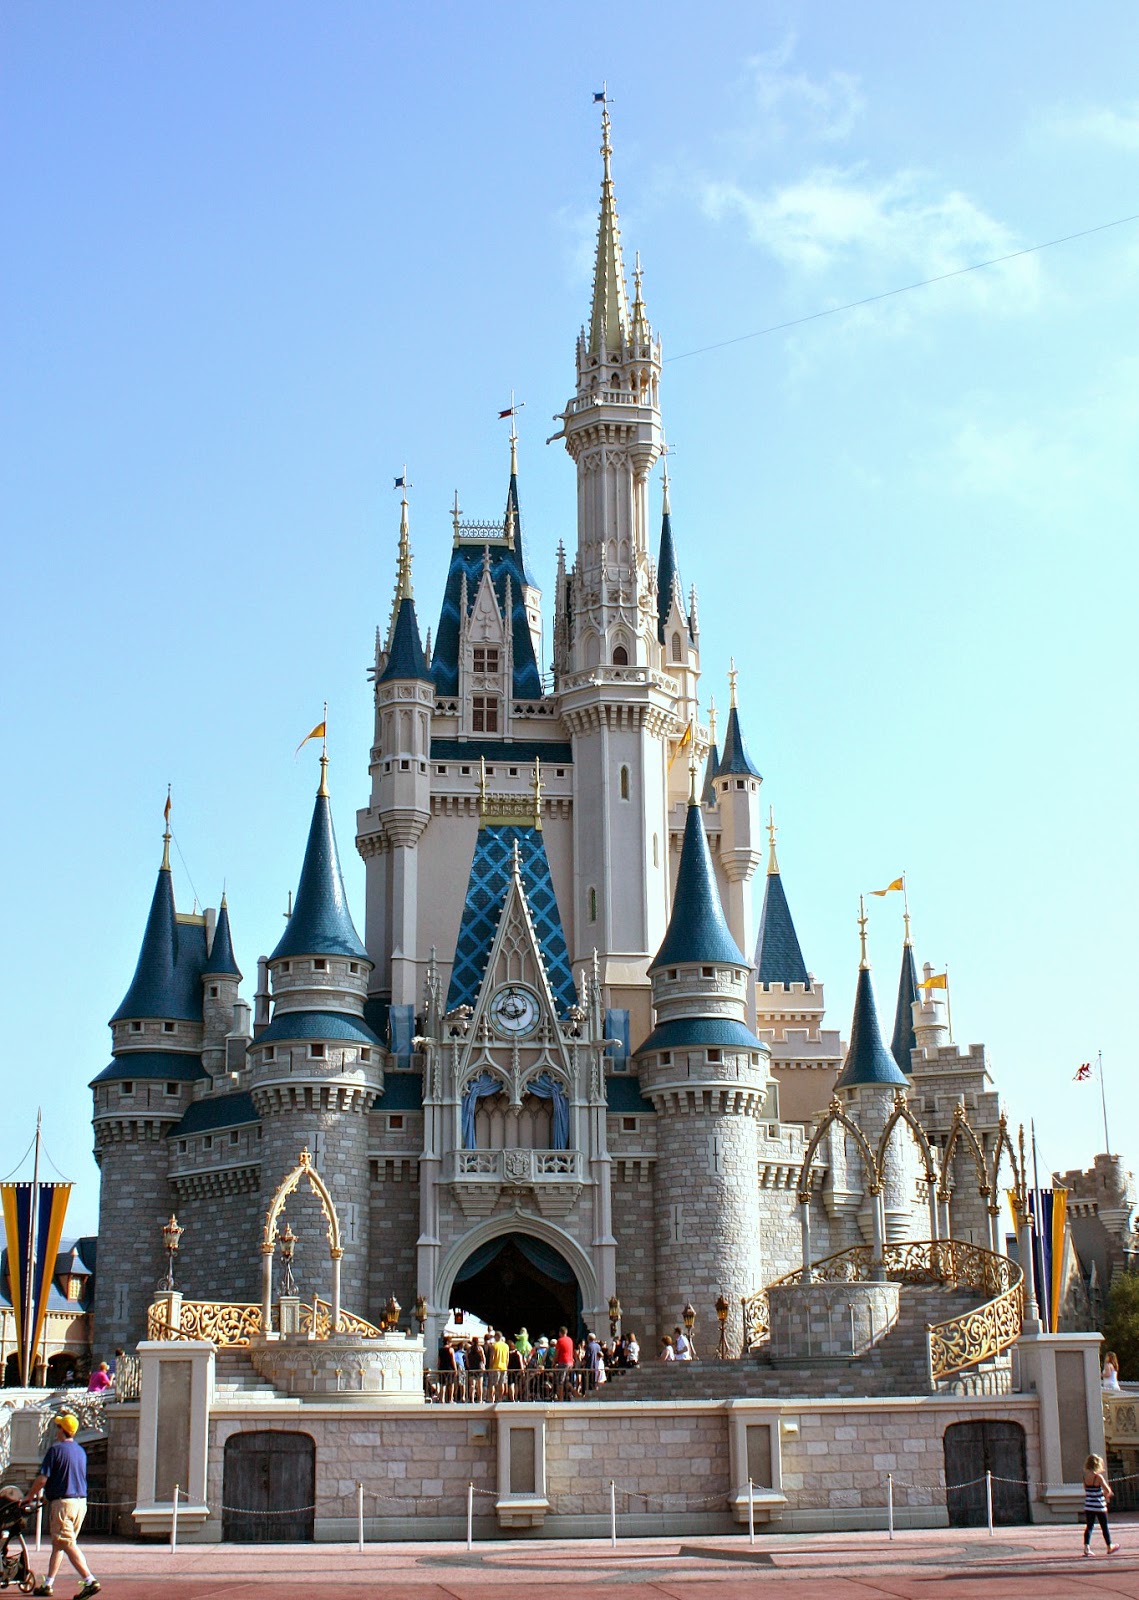 Florida: Disney World Time In Orlando (The First Half)